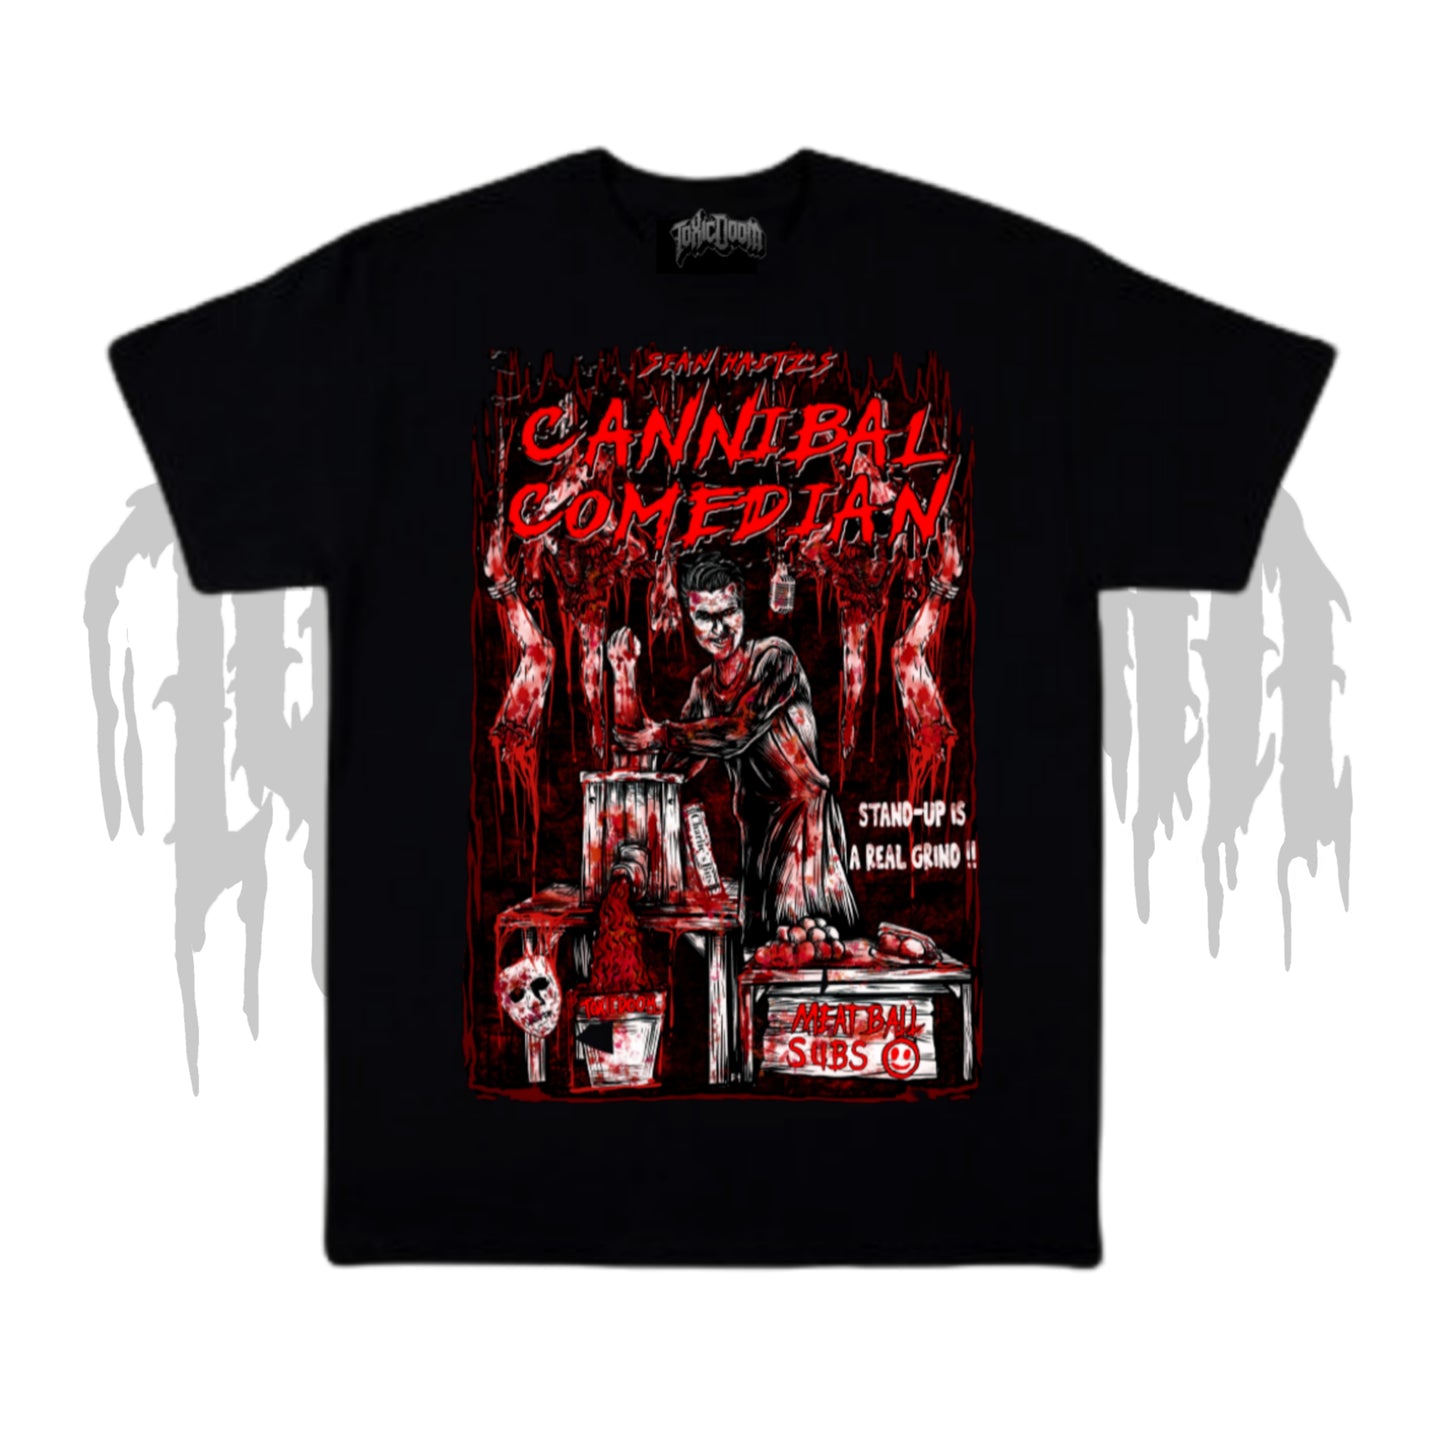 Sean Haitz's Cannibal Comedian Unisex Shirt Limited Edition